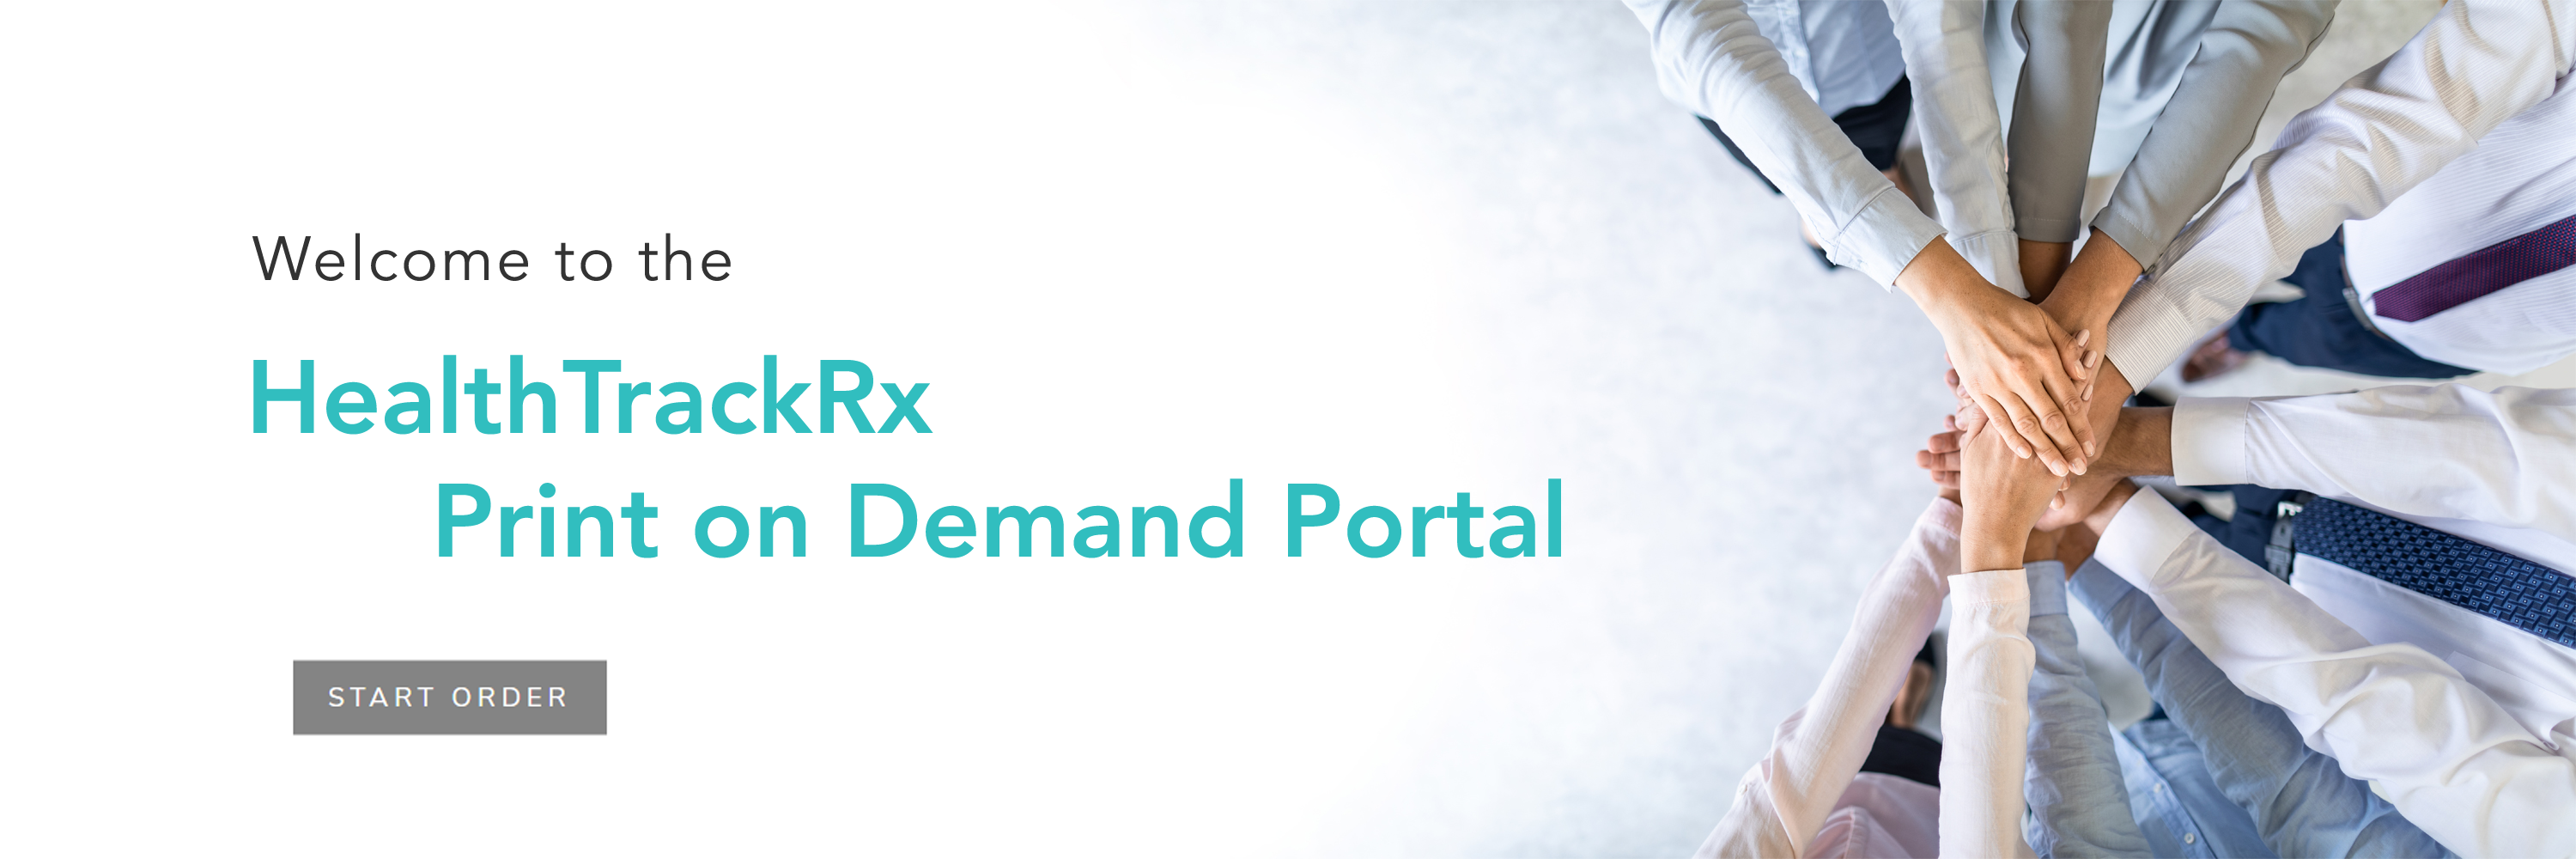 Welcome to the HealthTrackRx Print On Demand Portal